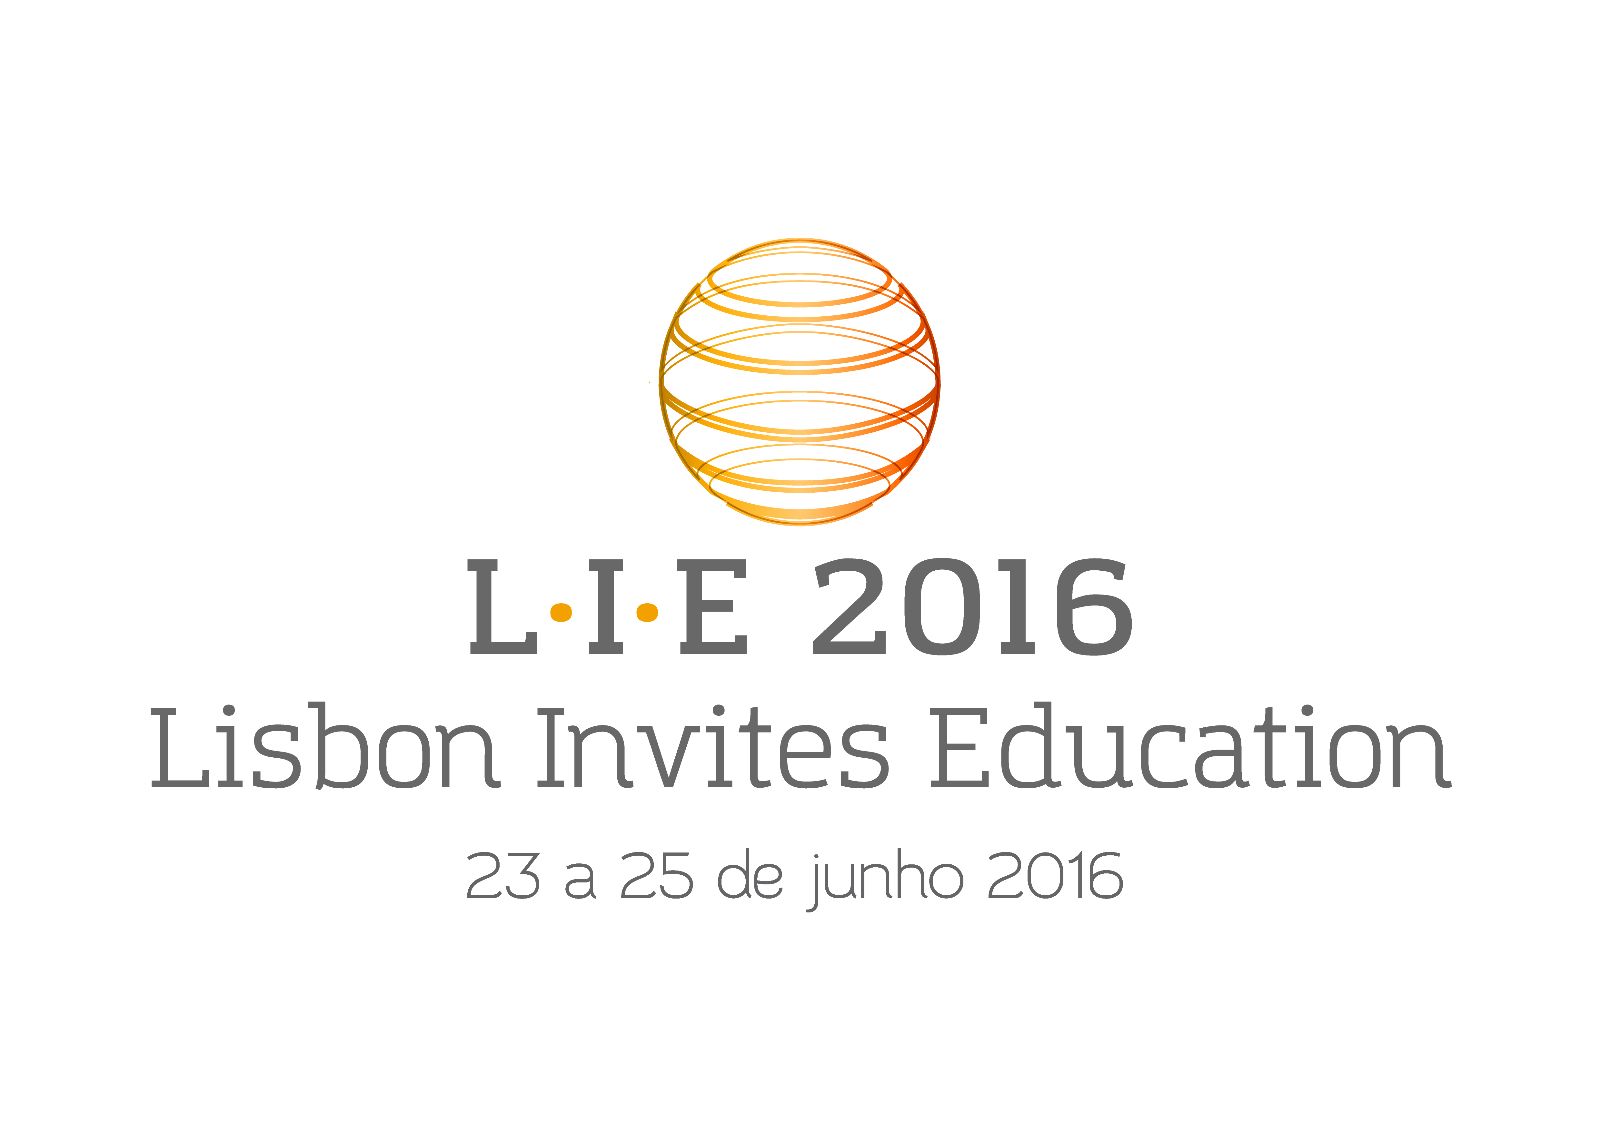 L . I . E - Lisbon Invites Education - II